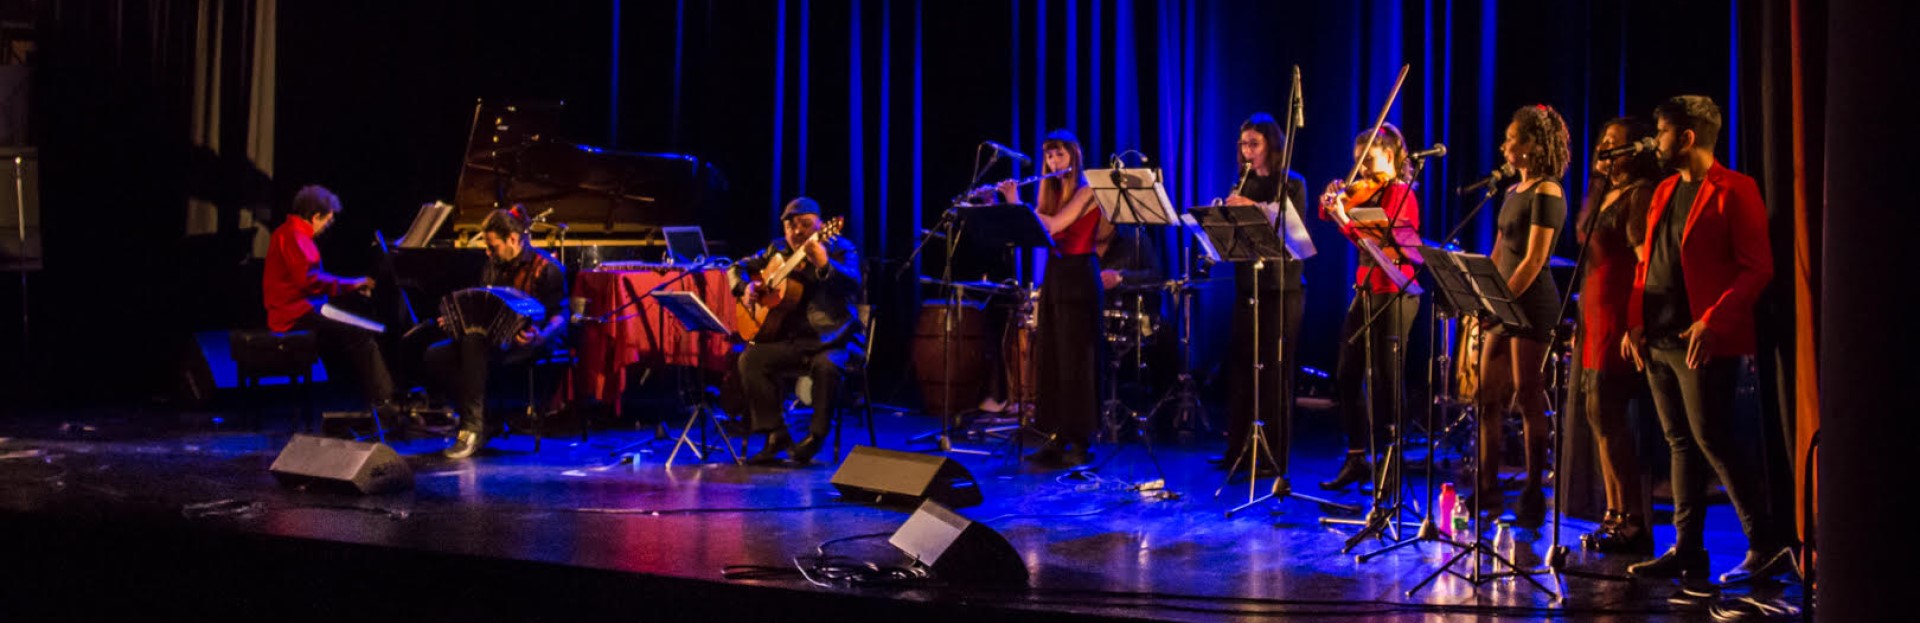 Orquesta Criolla de la UNA en Tecnópolis